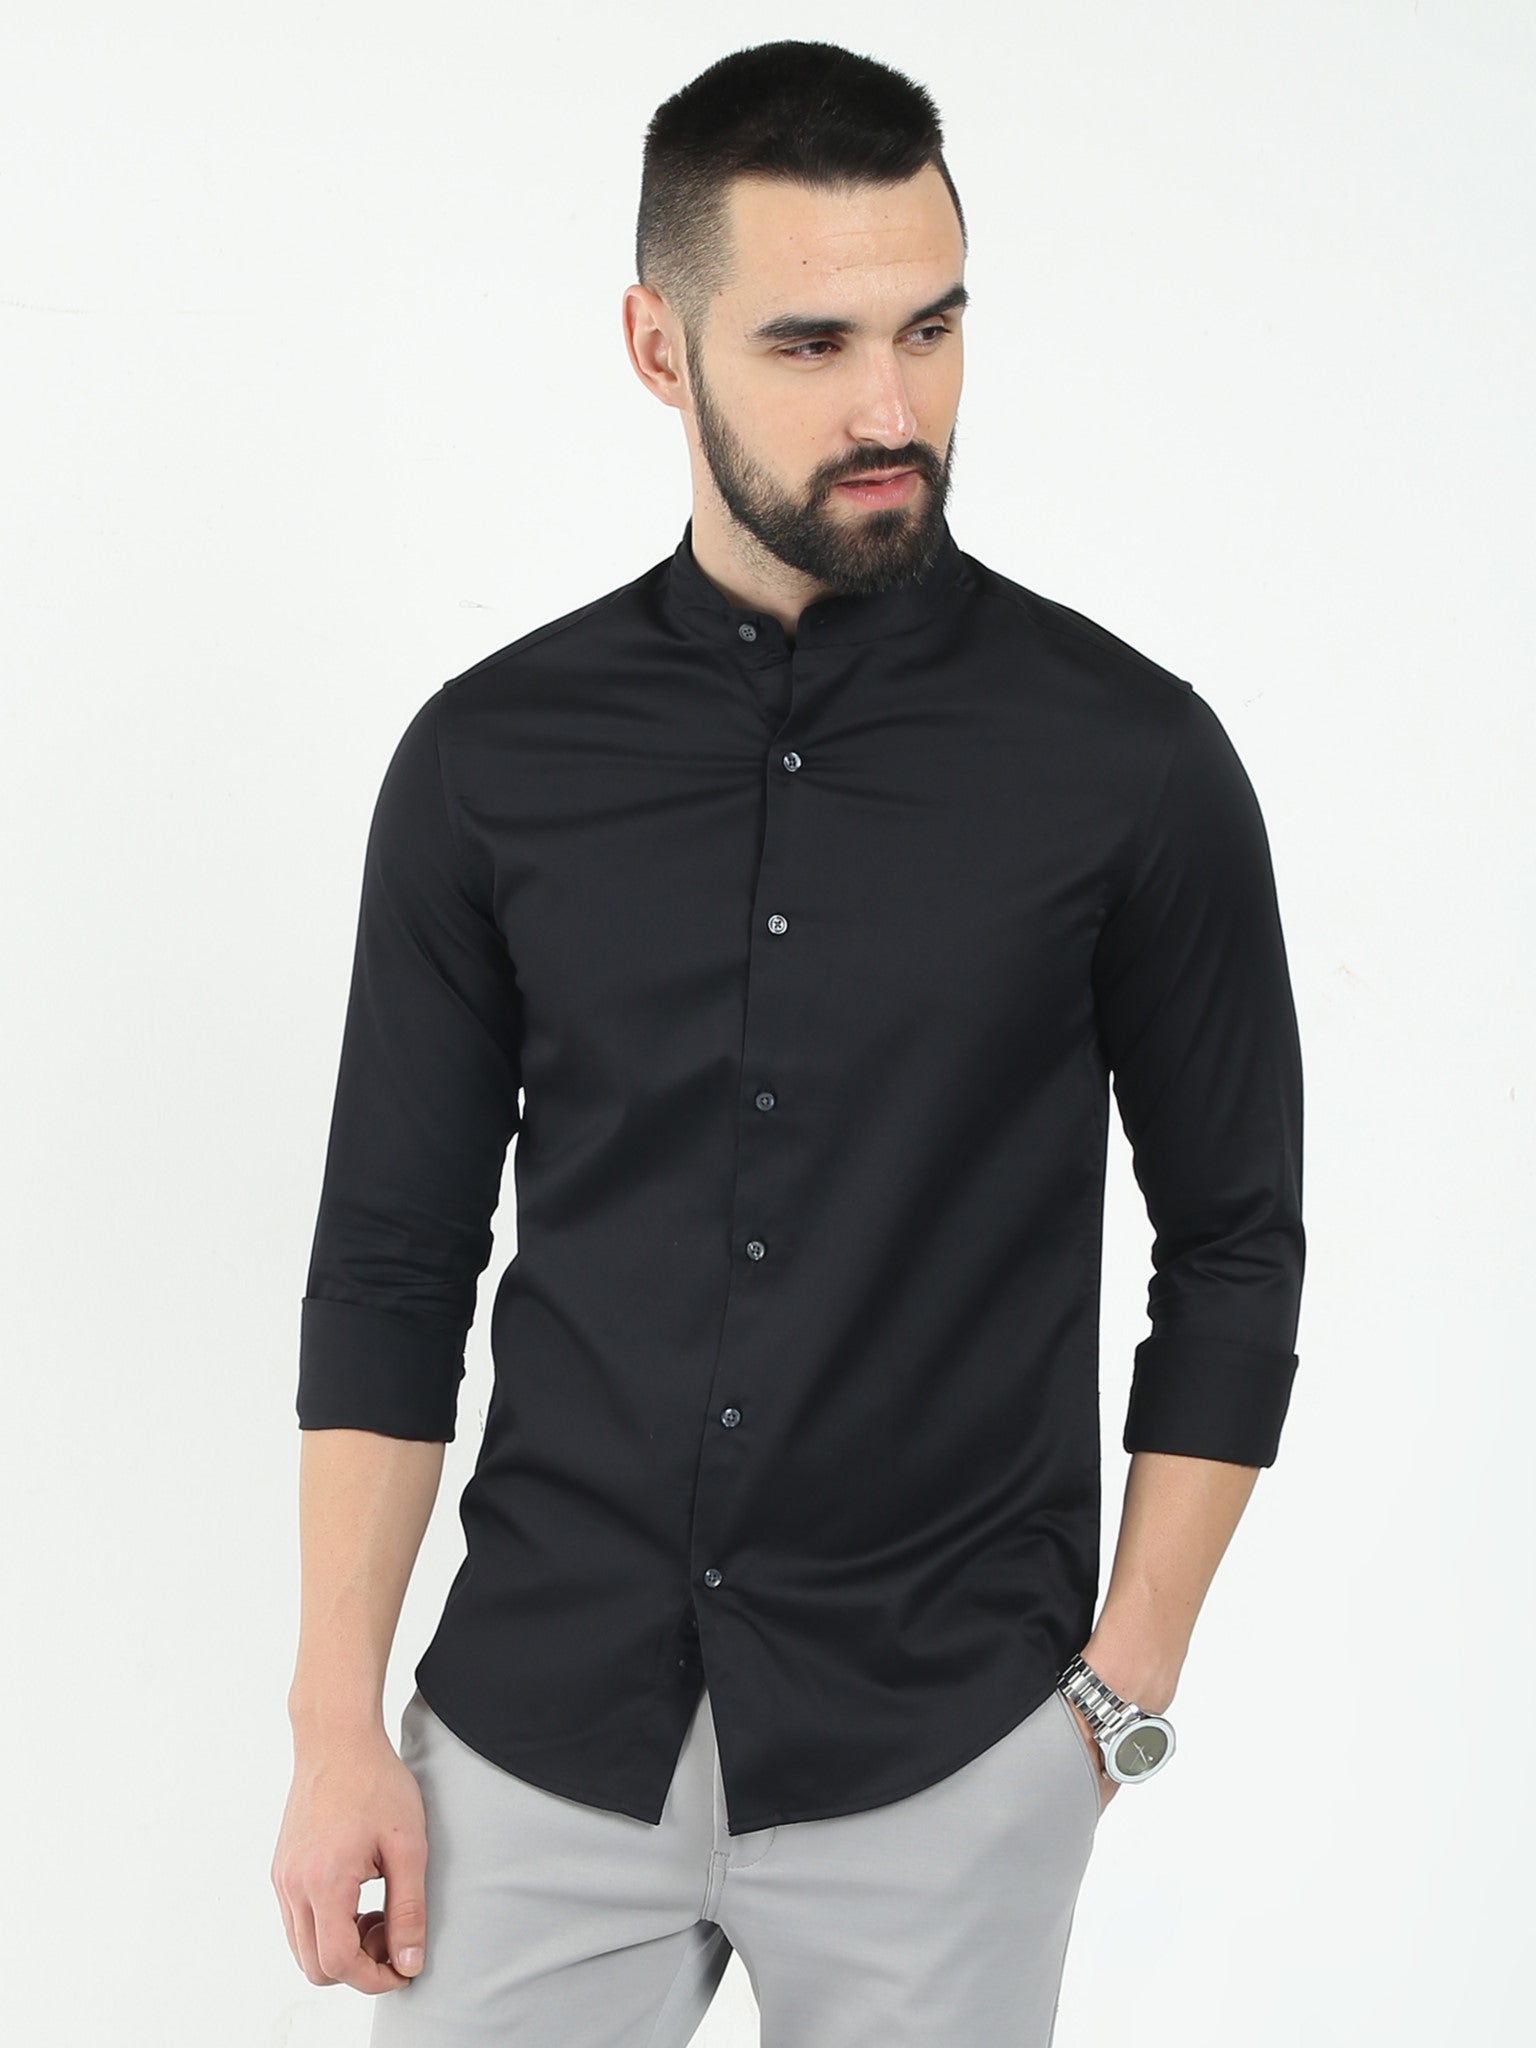 Marquis Black Shirt for Men